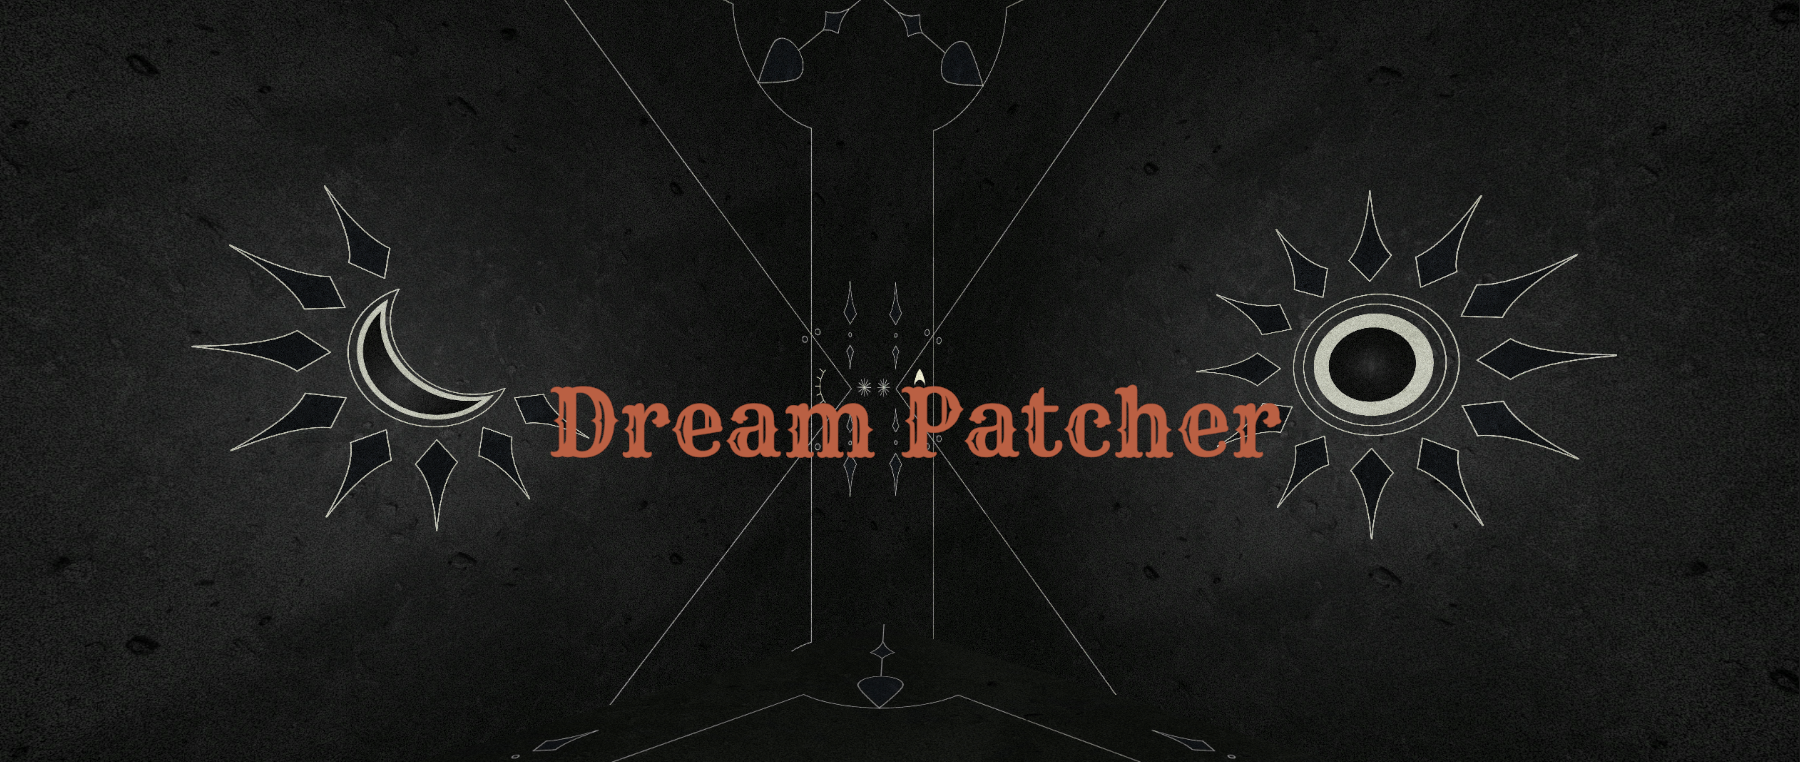 Dream Patcher